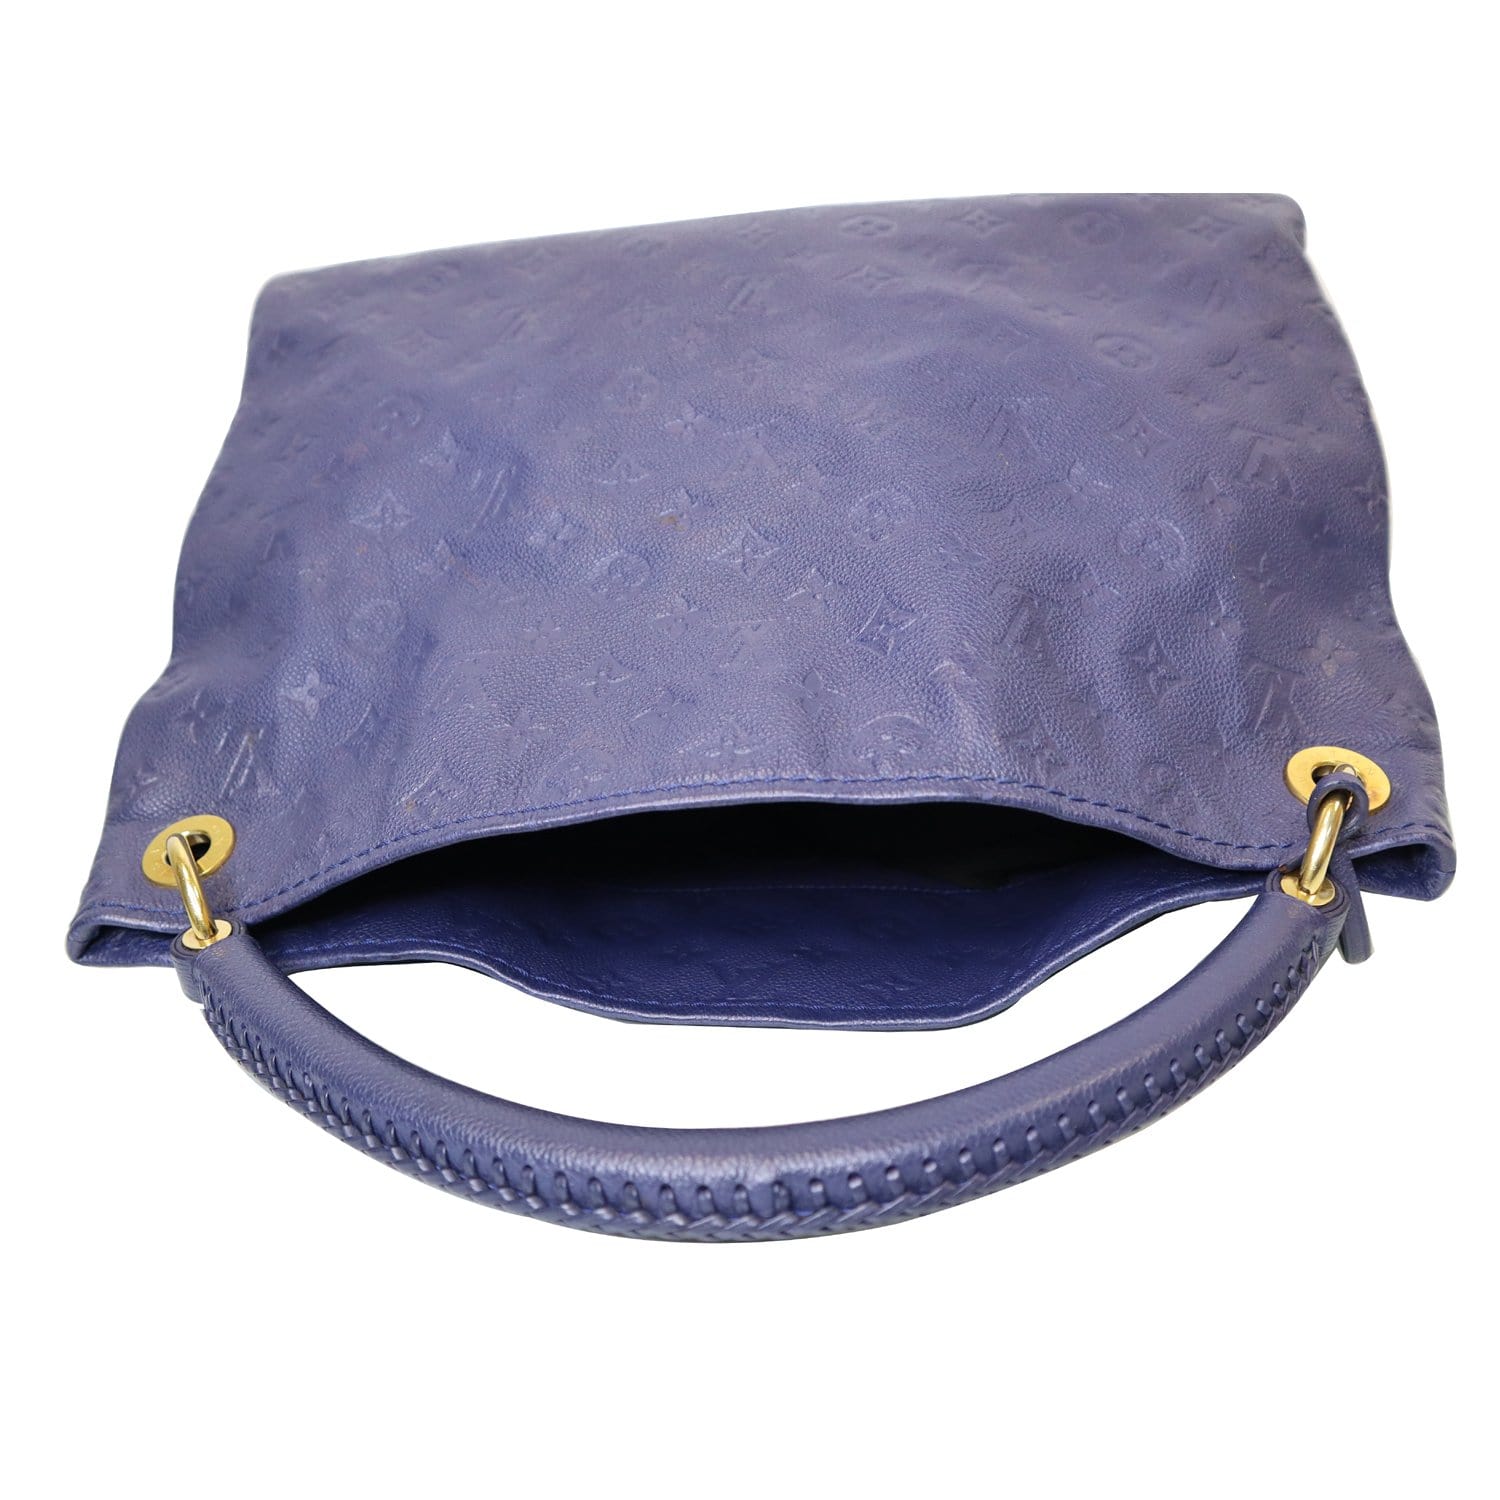 Artsy leather handbag Louis Vuitton Burgundy in Leather - 38366144